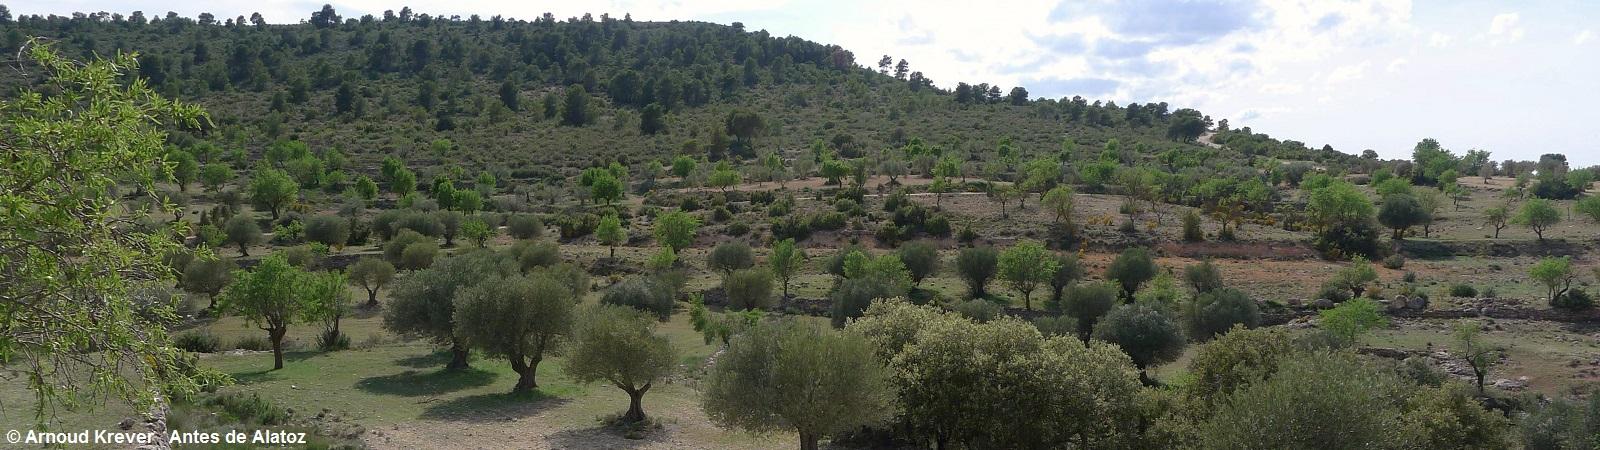 15Lana (557) Sierra vóór Alatoz, olijfboomgaard